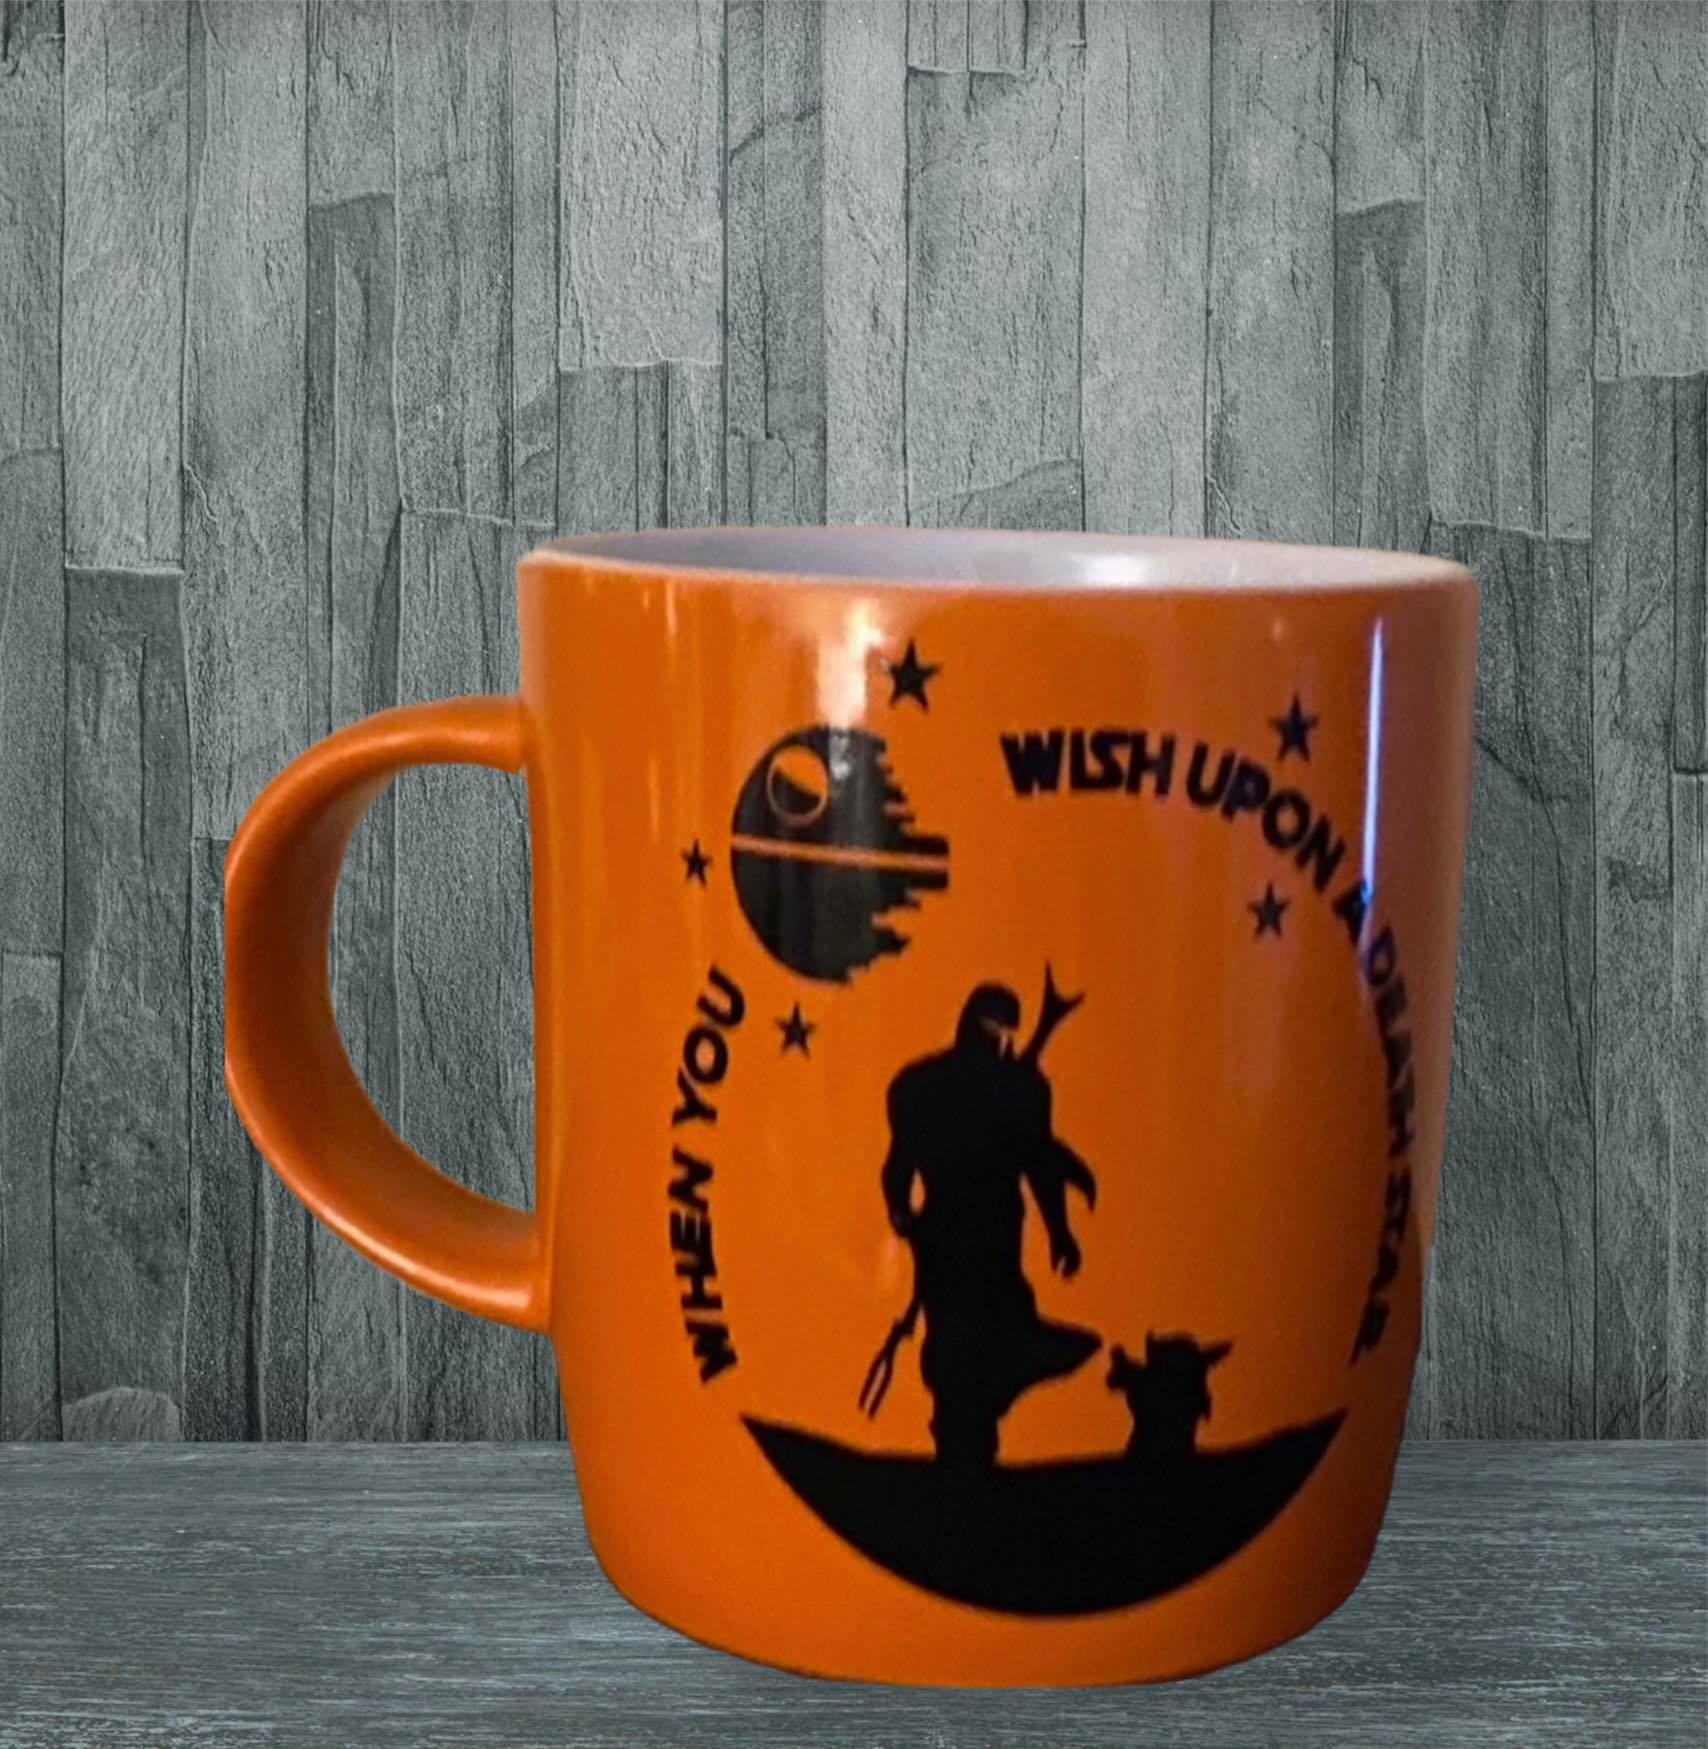 "When You Wish Upon A Death Star" Mug